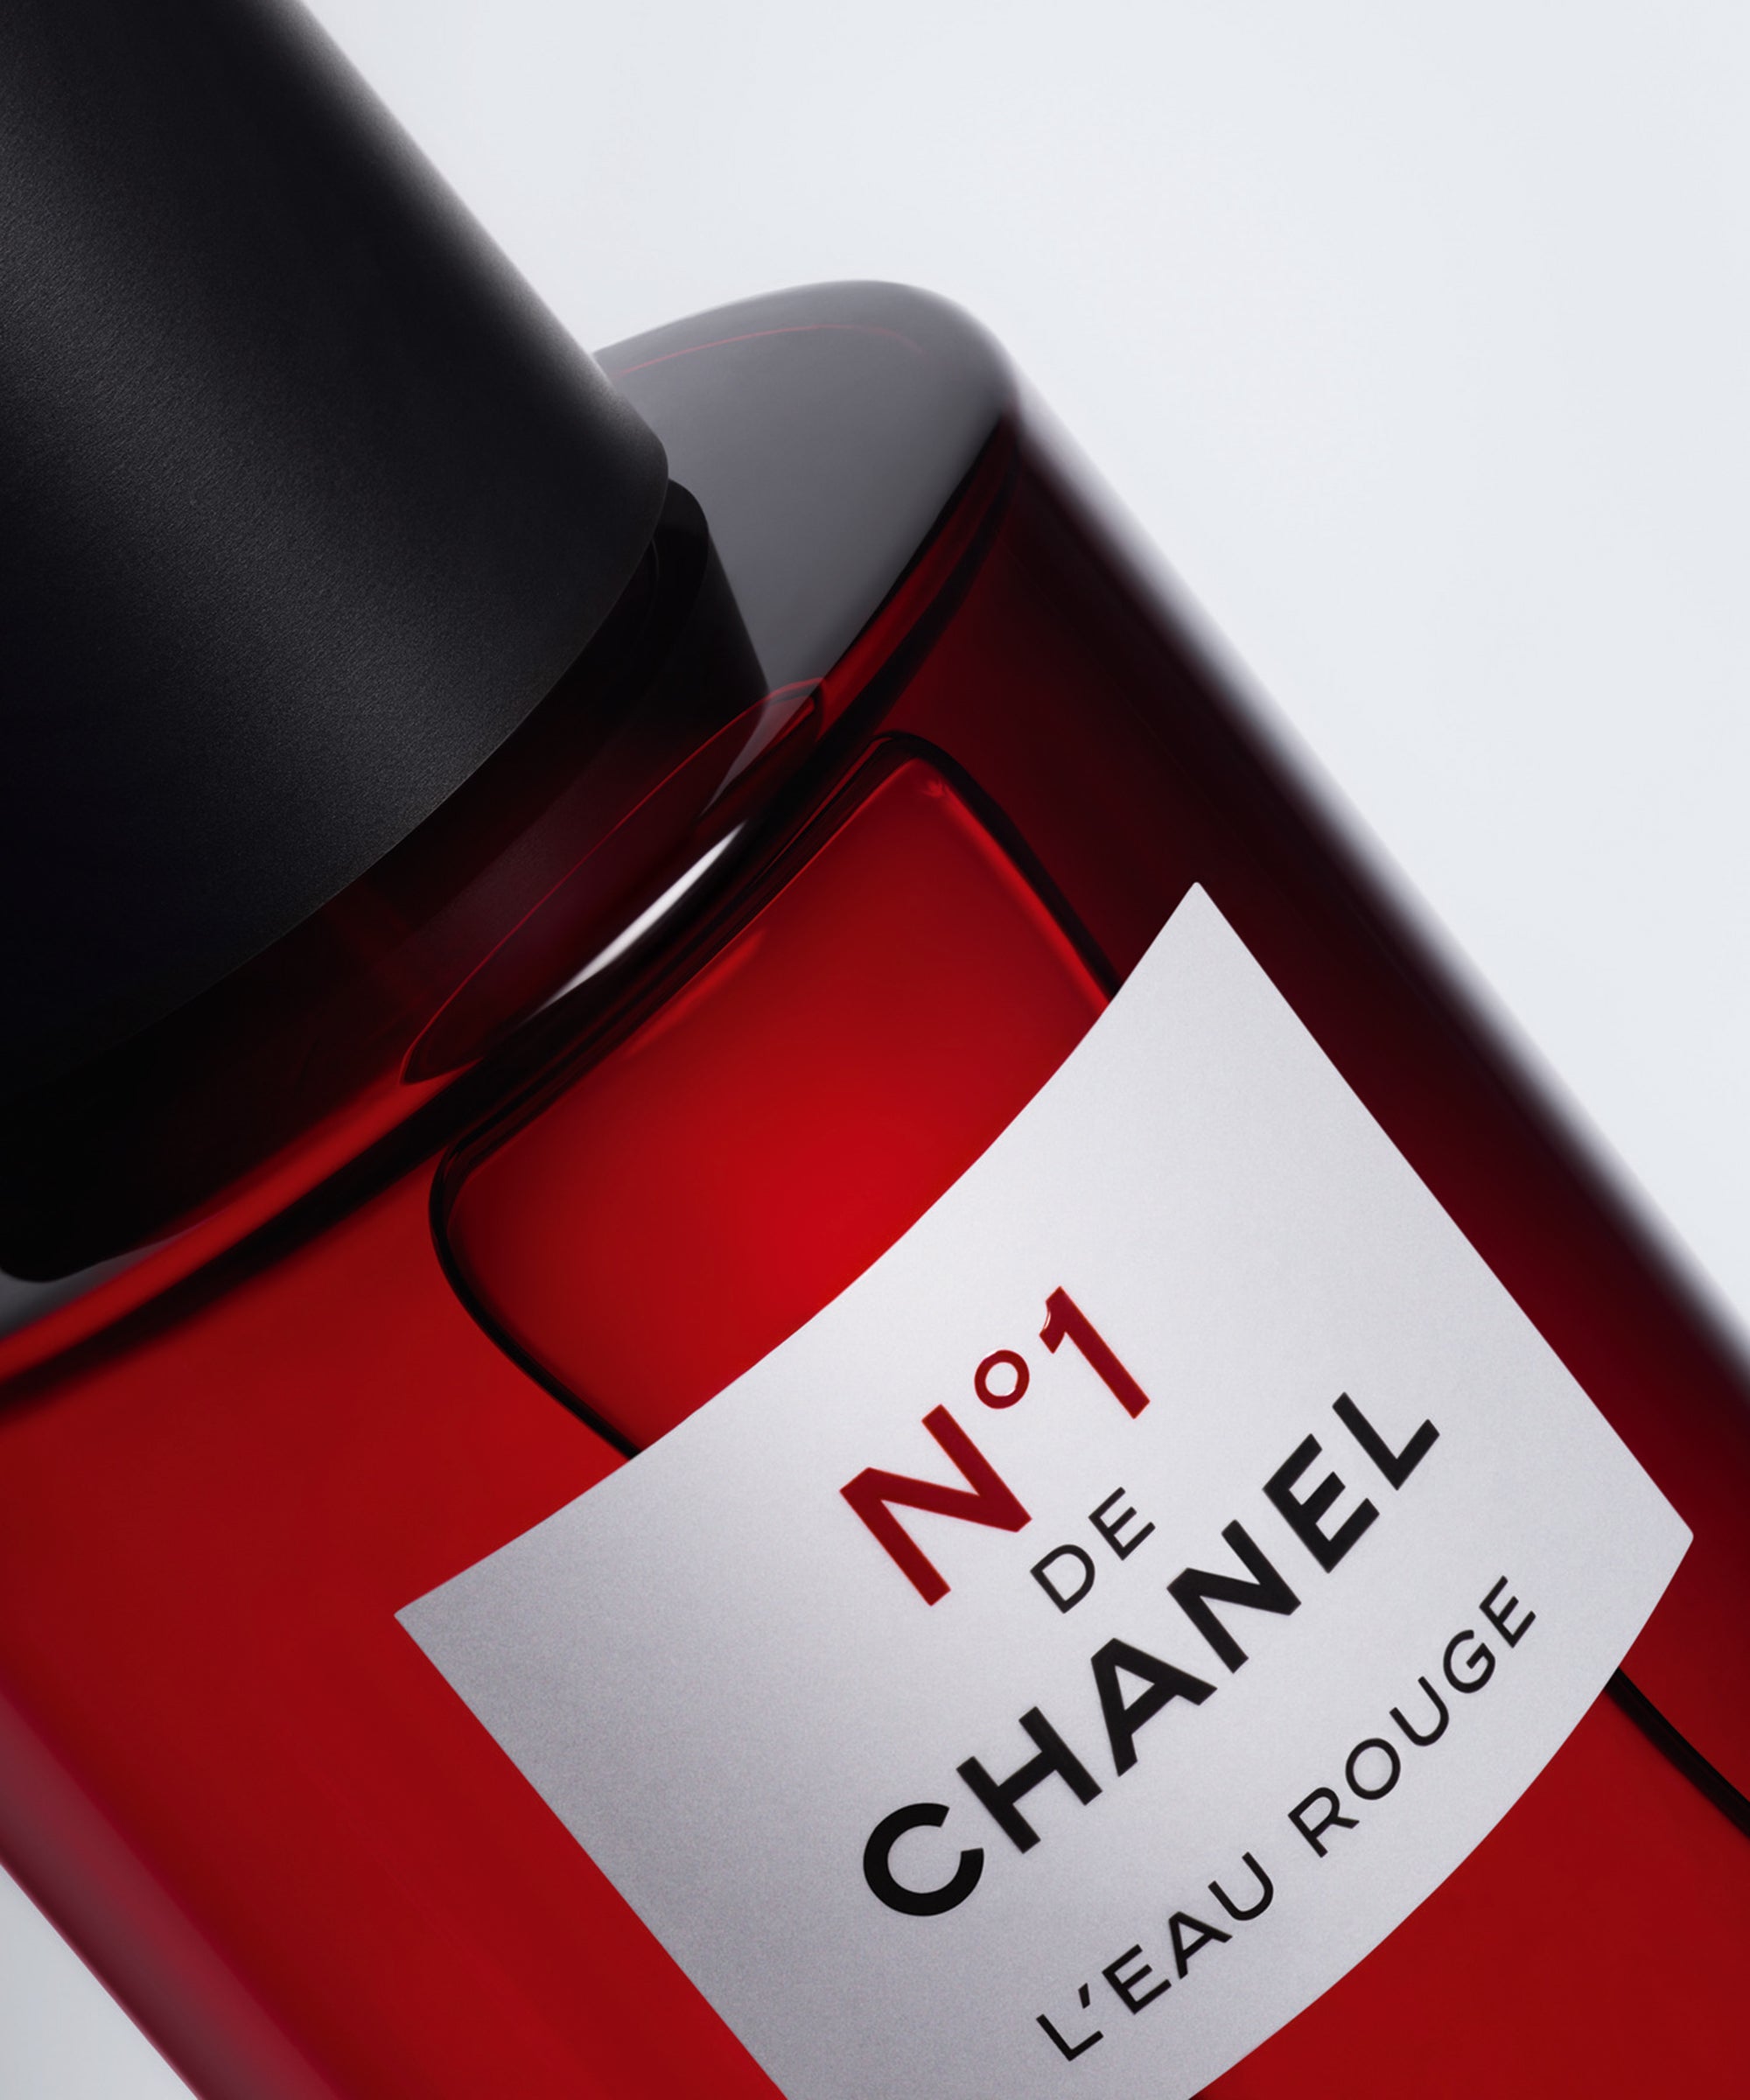 Revitalizing Face Serum Chanel N1 De Chanel Revitalizing Serum